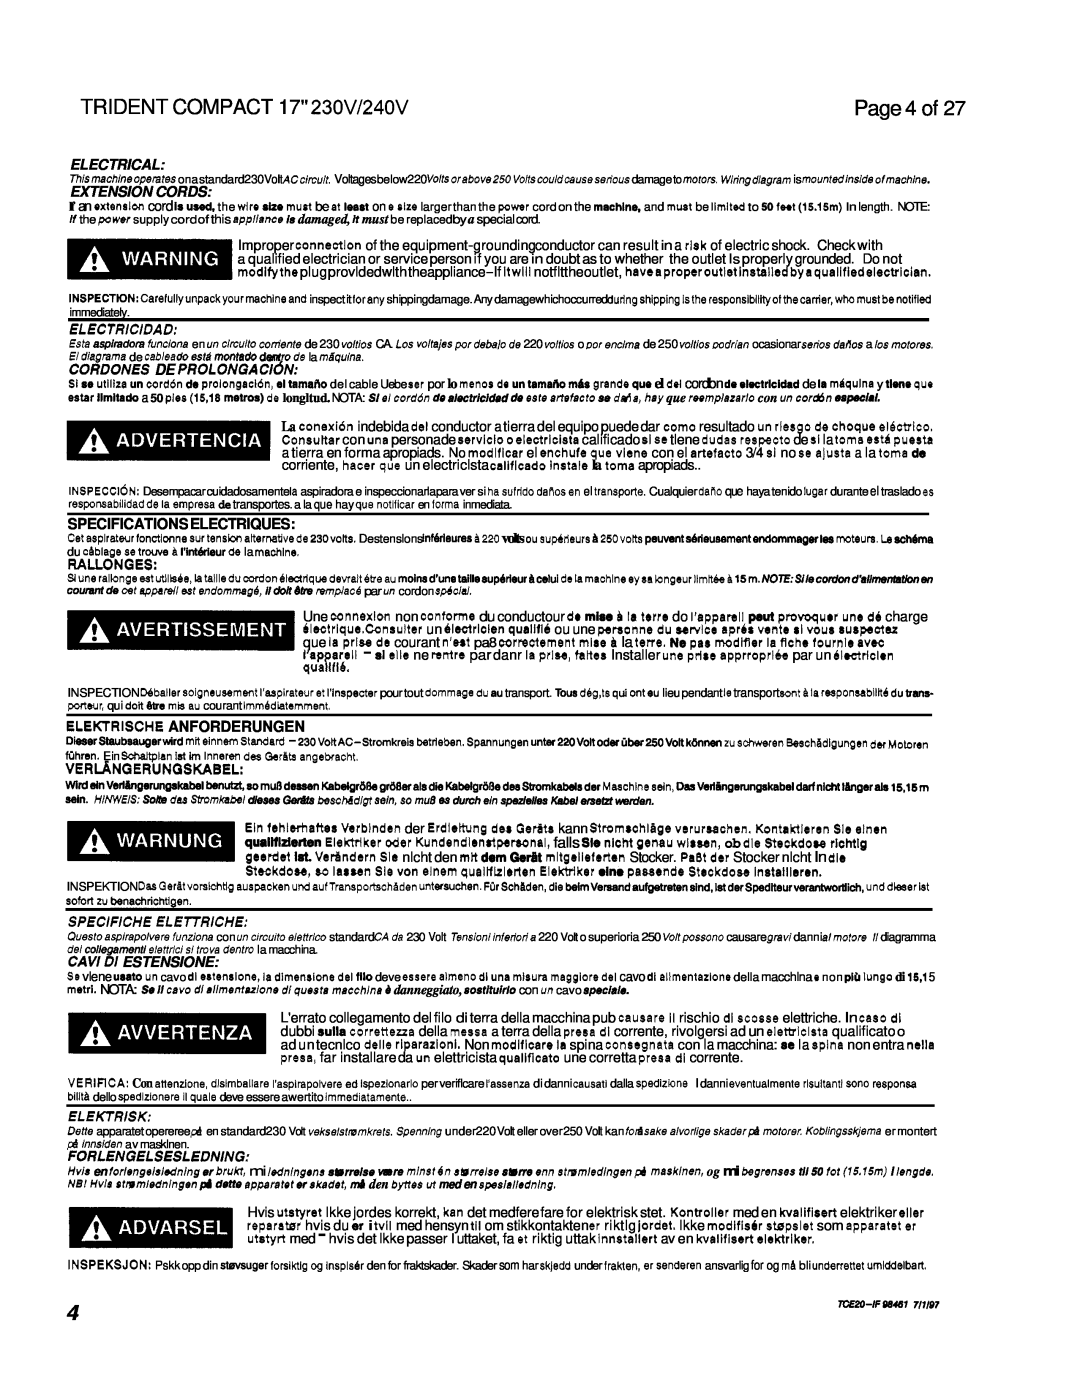 Windsor Page 4 of, TRIDENT COMPACT 17 230V/240V, Electrical, Extension Cords, Electricidad, Cordones De Prolongaci 